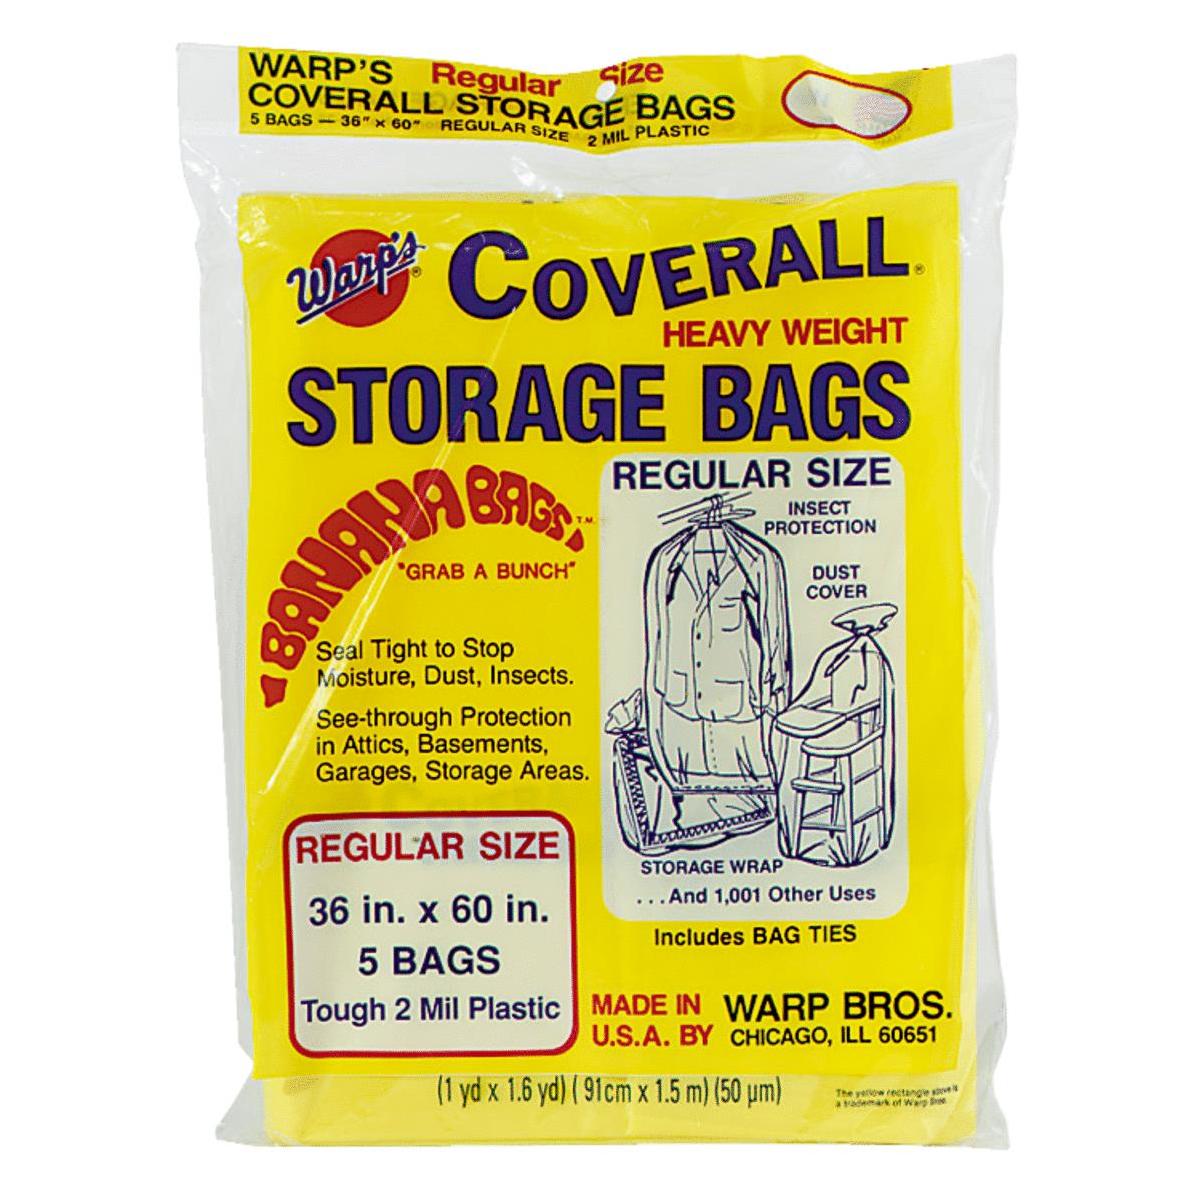 Ziploc Big Bag 10 Gallon XL Storage Bags, 2 feet x 20in (4-Count) Pack of 4